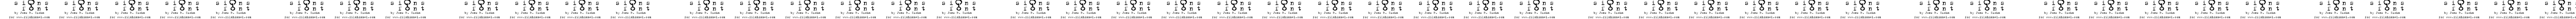 Пример написания шрифтом signs - zeichen 2.0 текста на русском